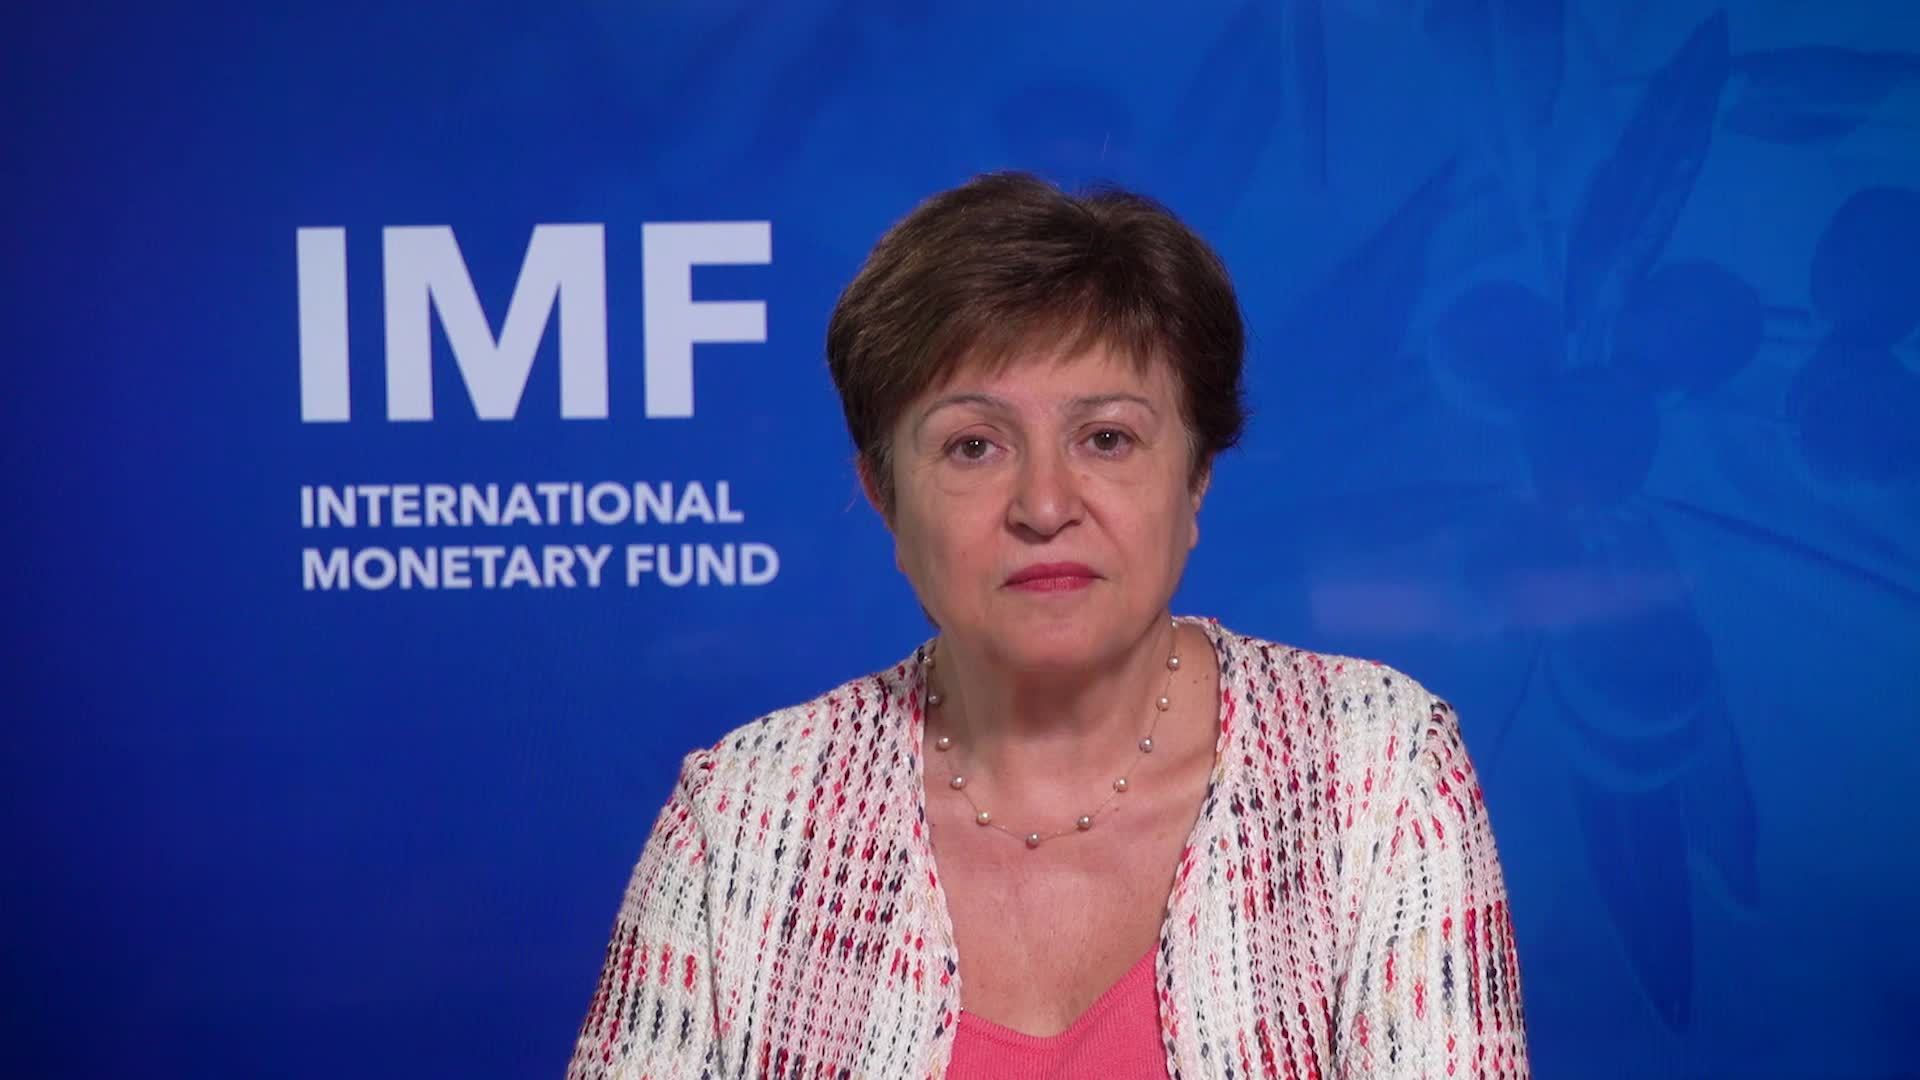 IMF / Georgieva and Lagarde on Gender, Money, and Finance